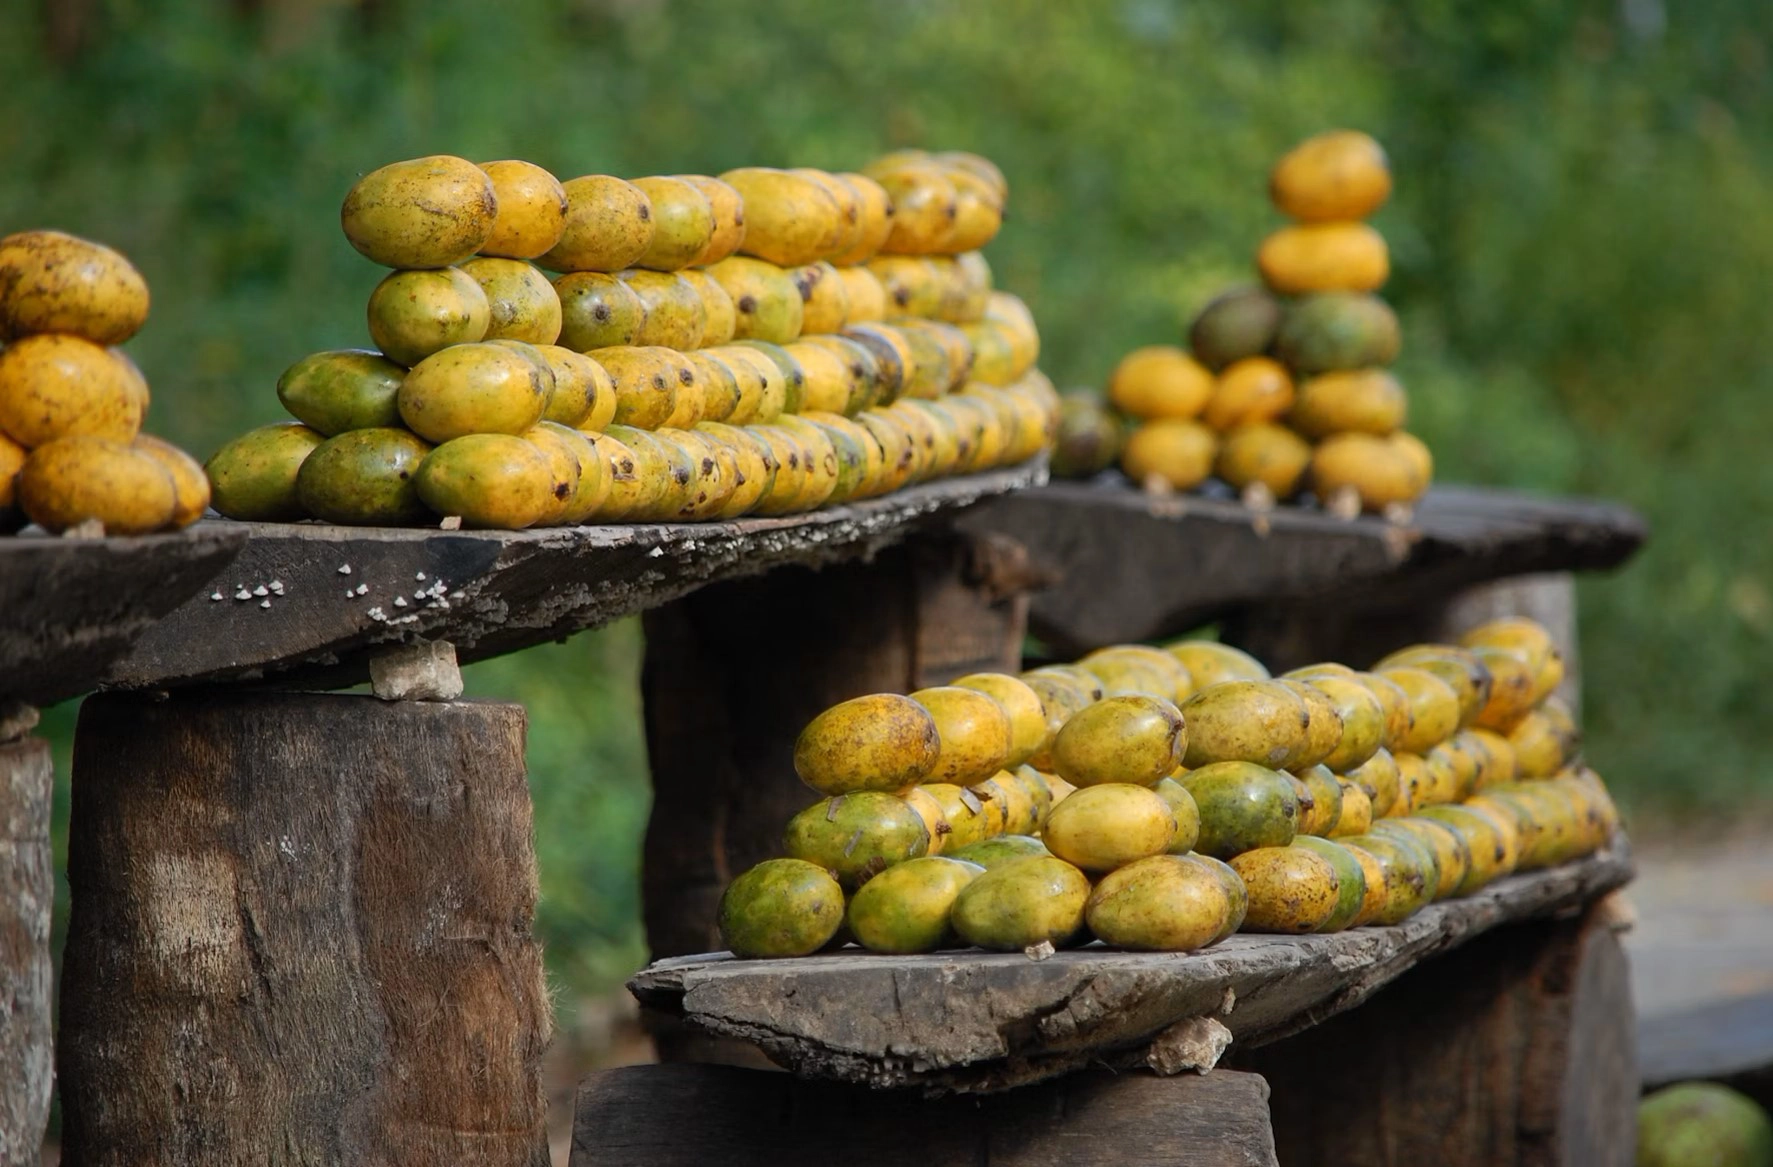 Many stacked mangos on wood boards